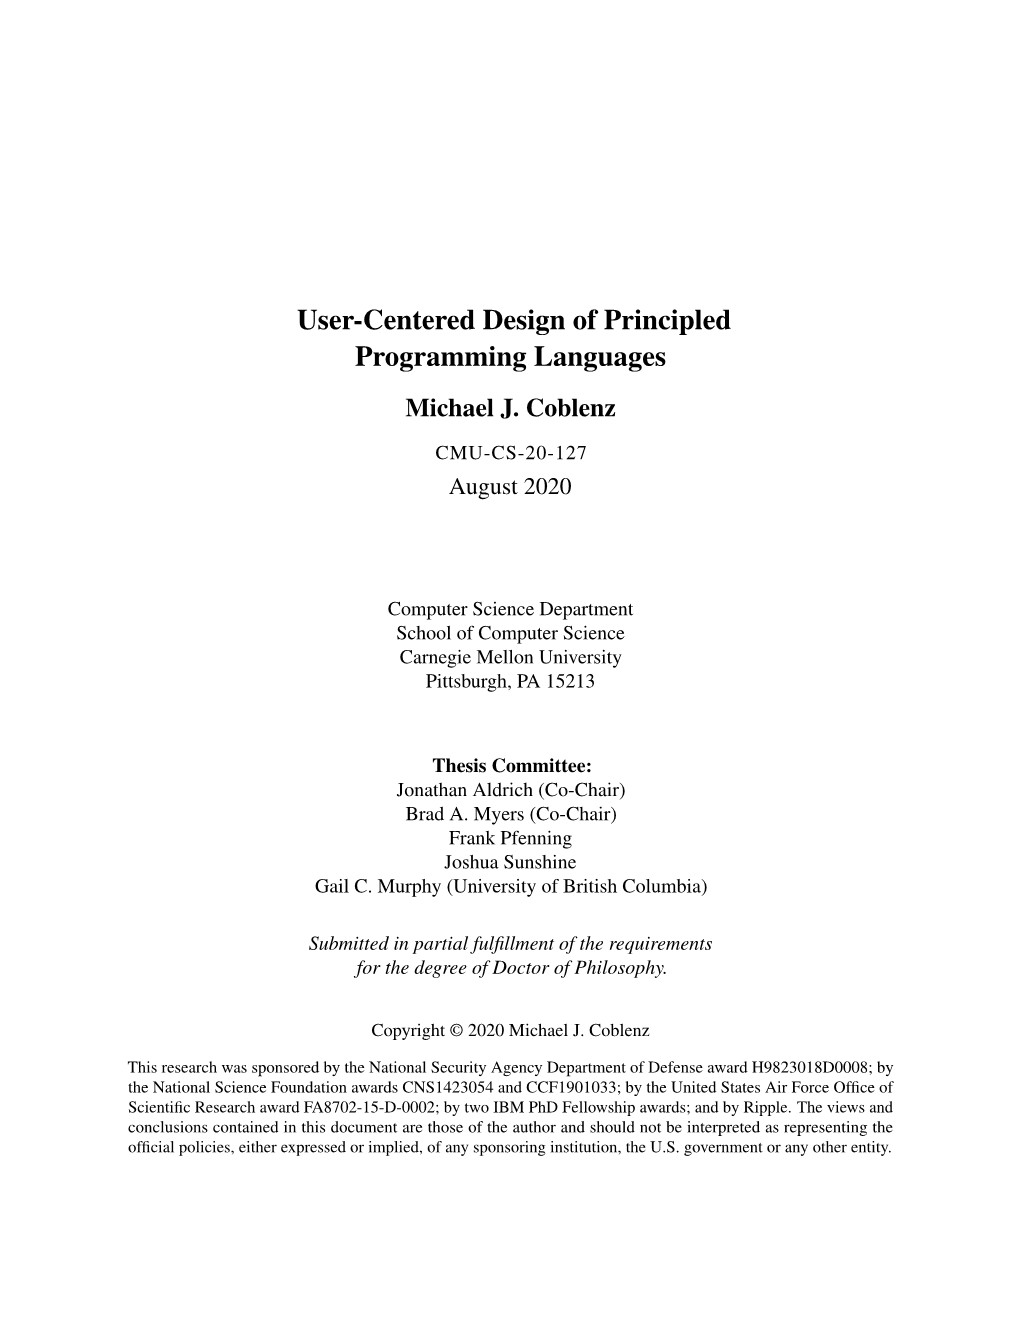 User-Centered Design of Principled Programming Languages Michael J